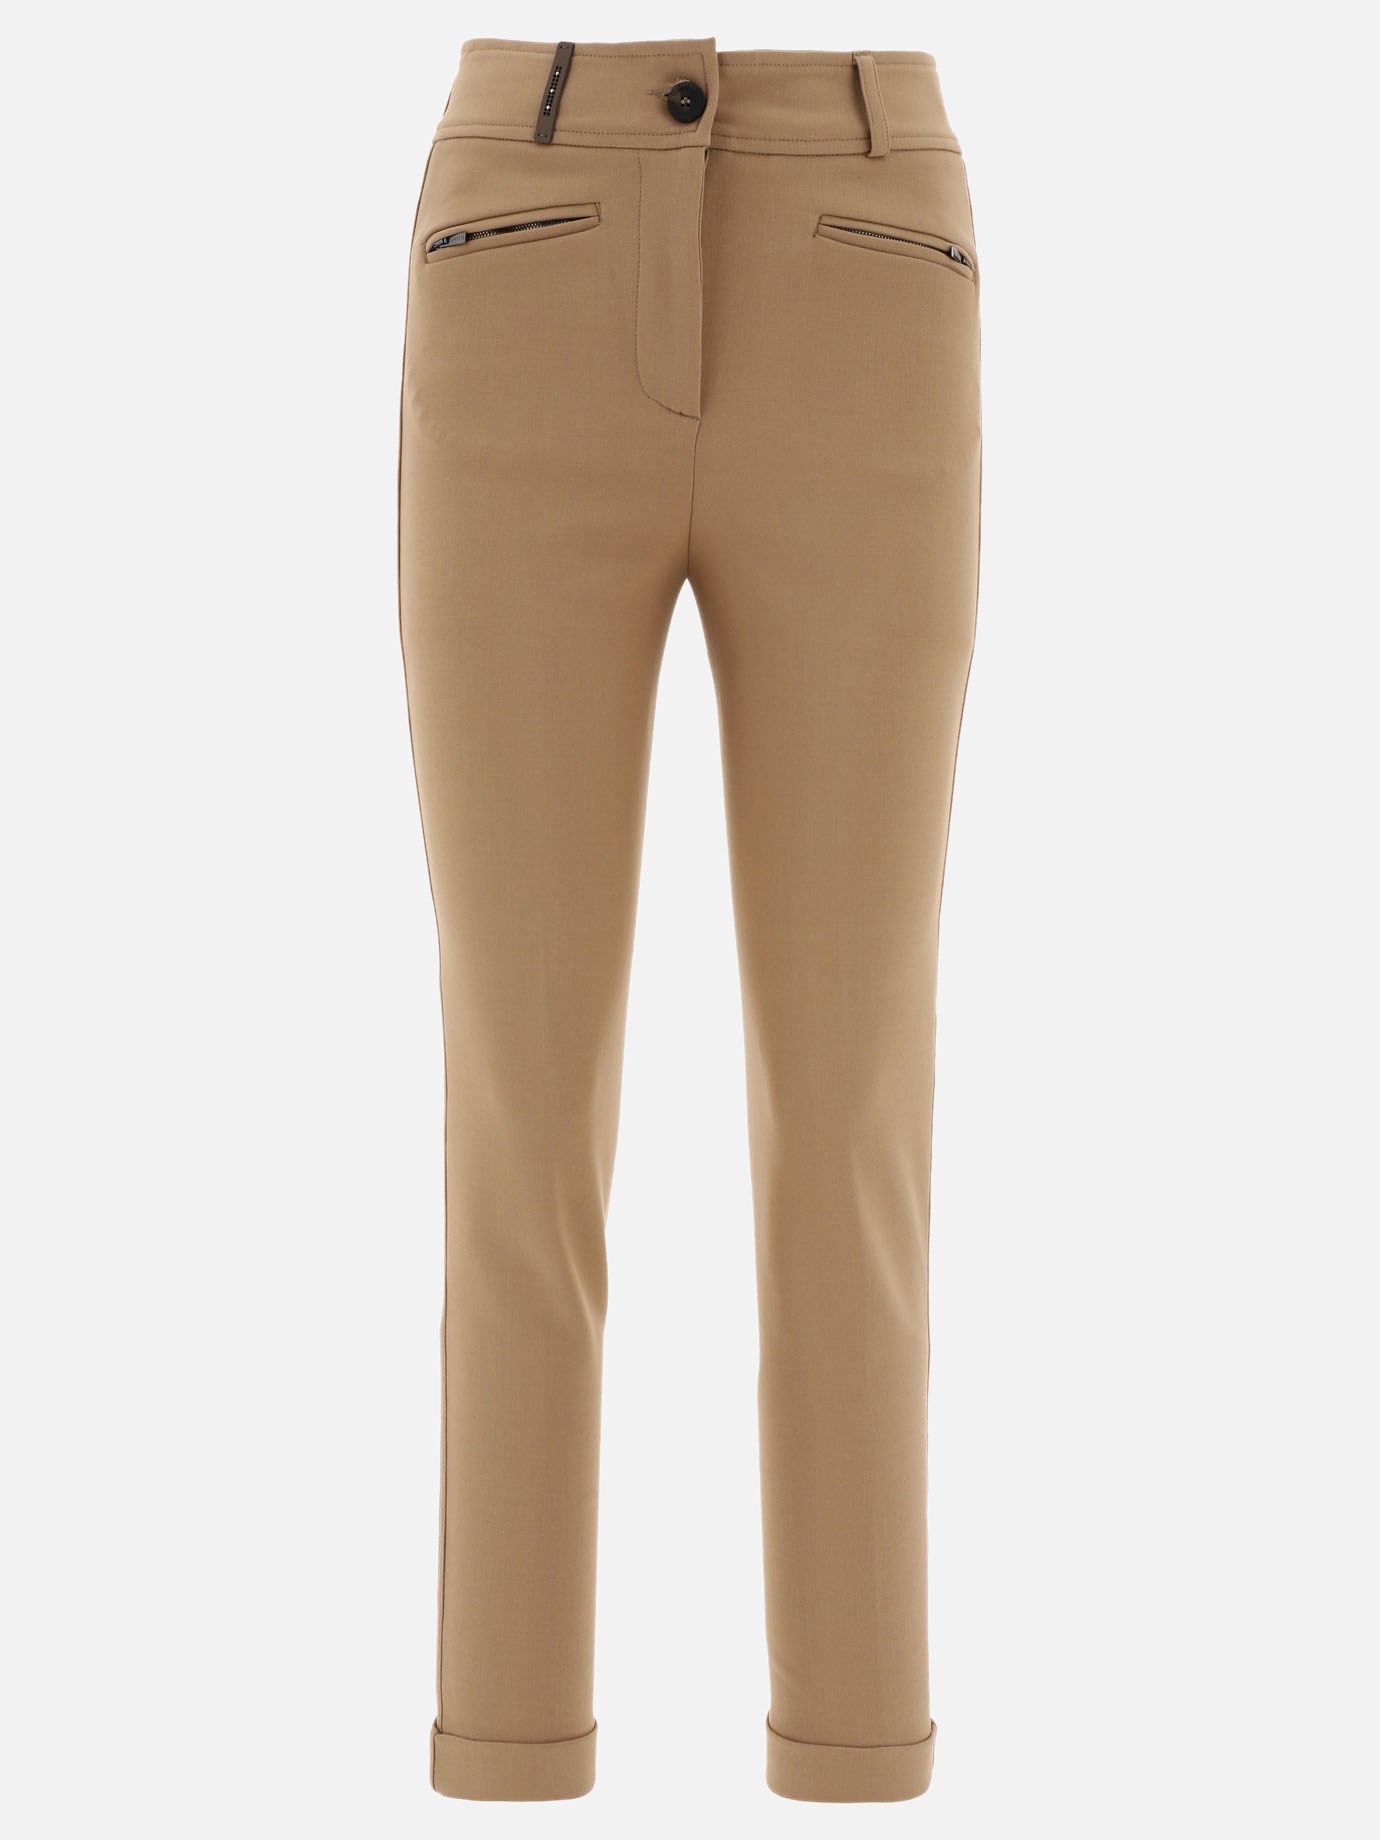 Pantalone con tasche zipby Peserico - 3